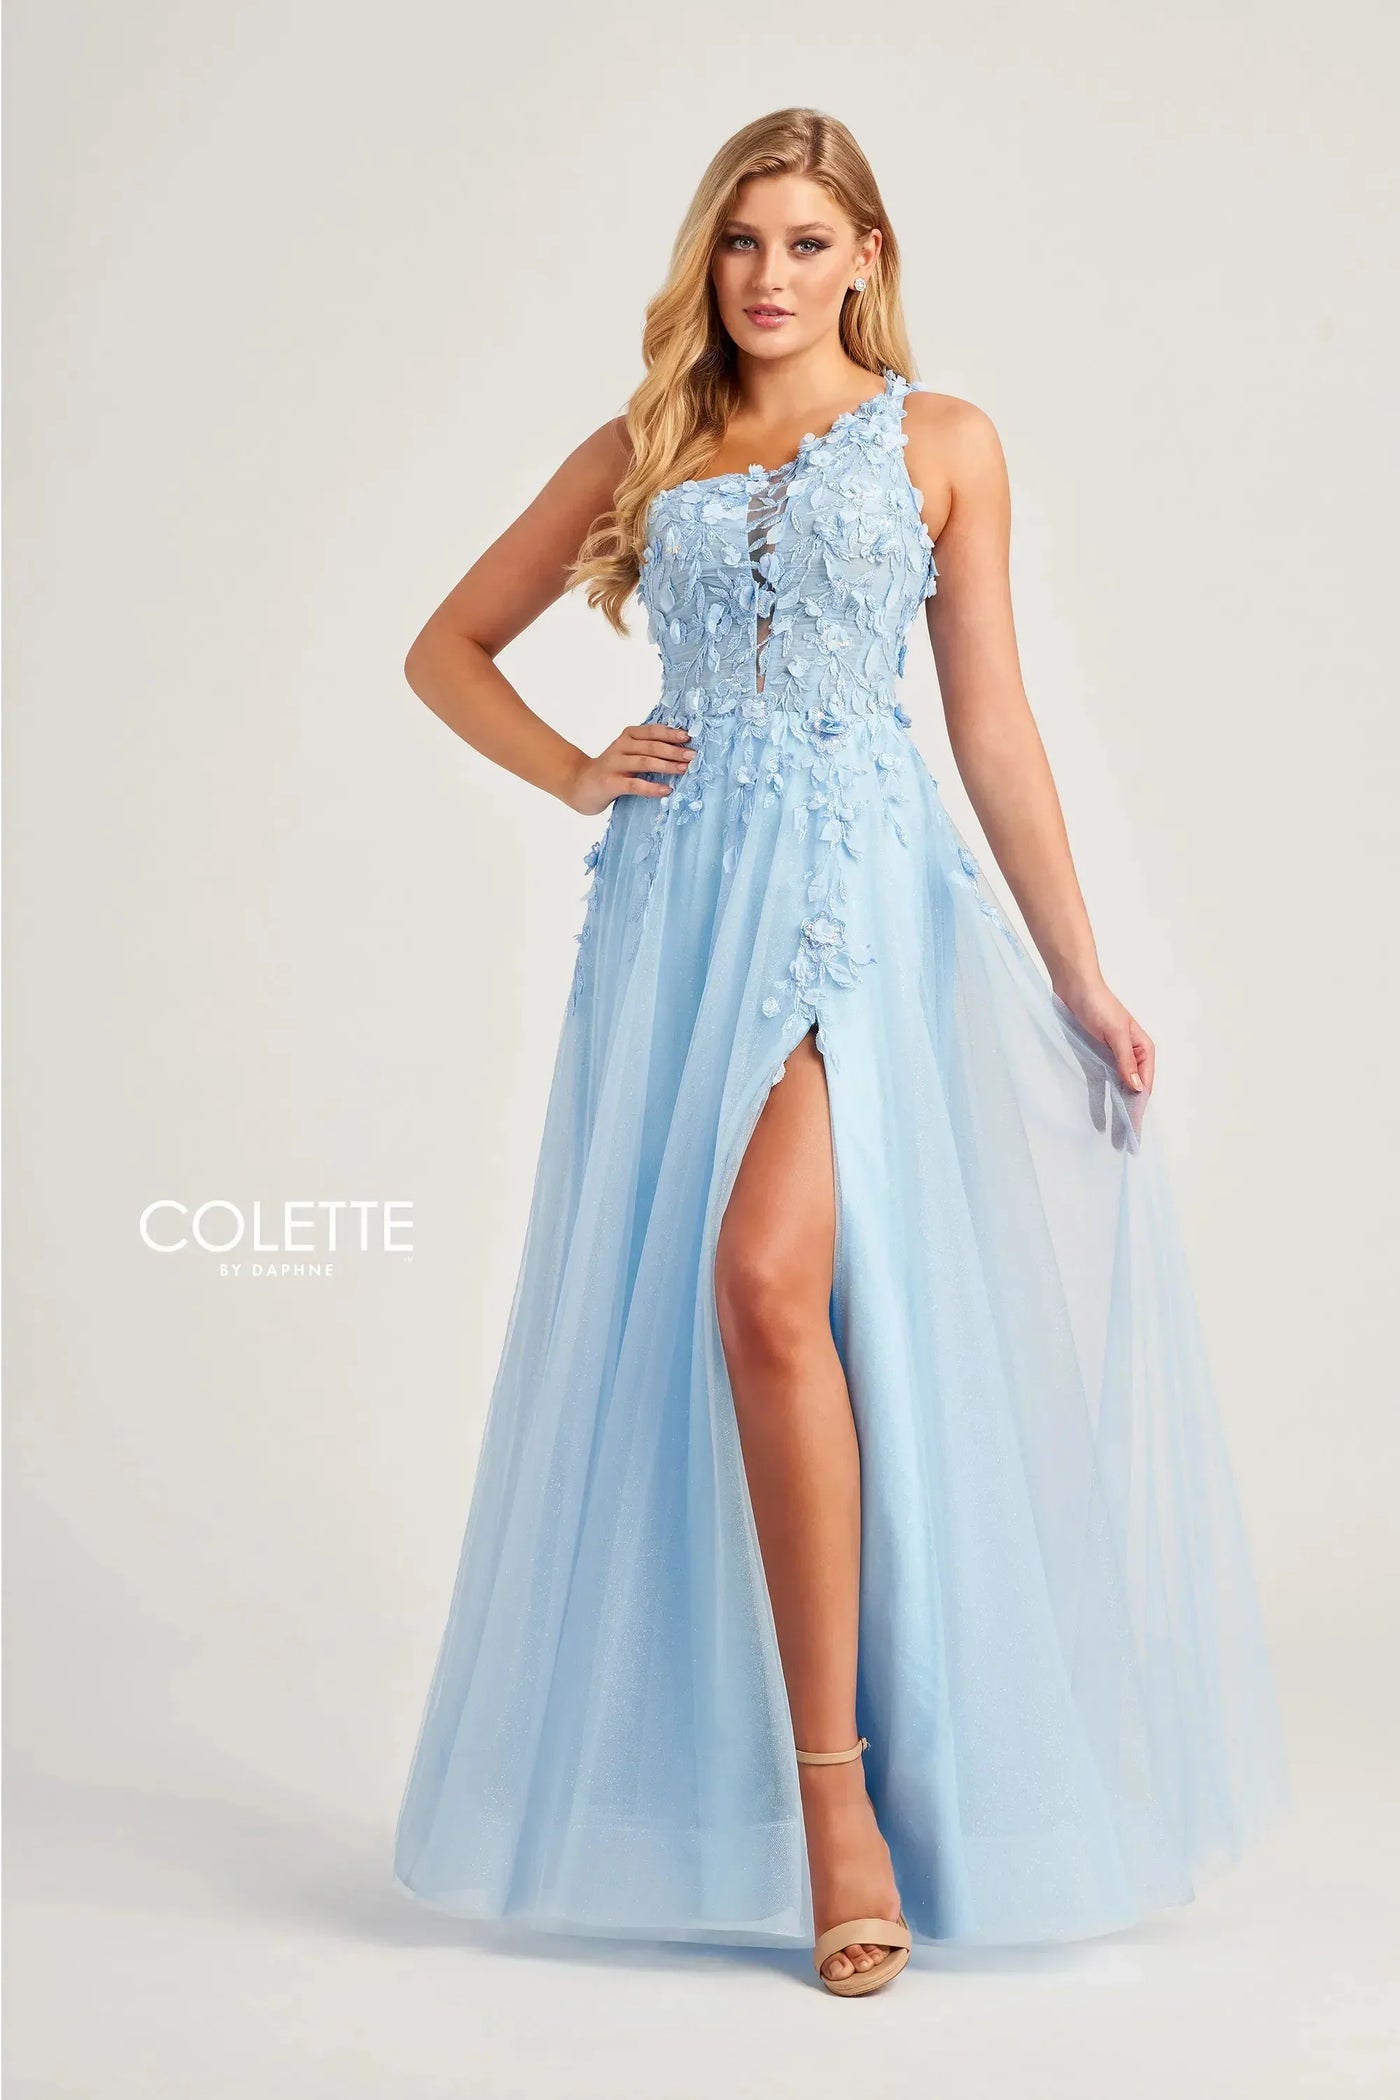 Colette By Daphne CL5124 - One Shoulder Applique Prom Dress